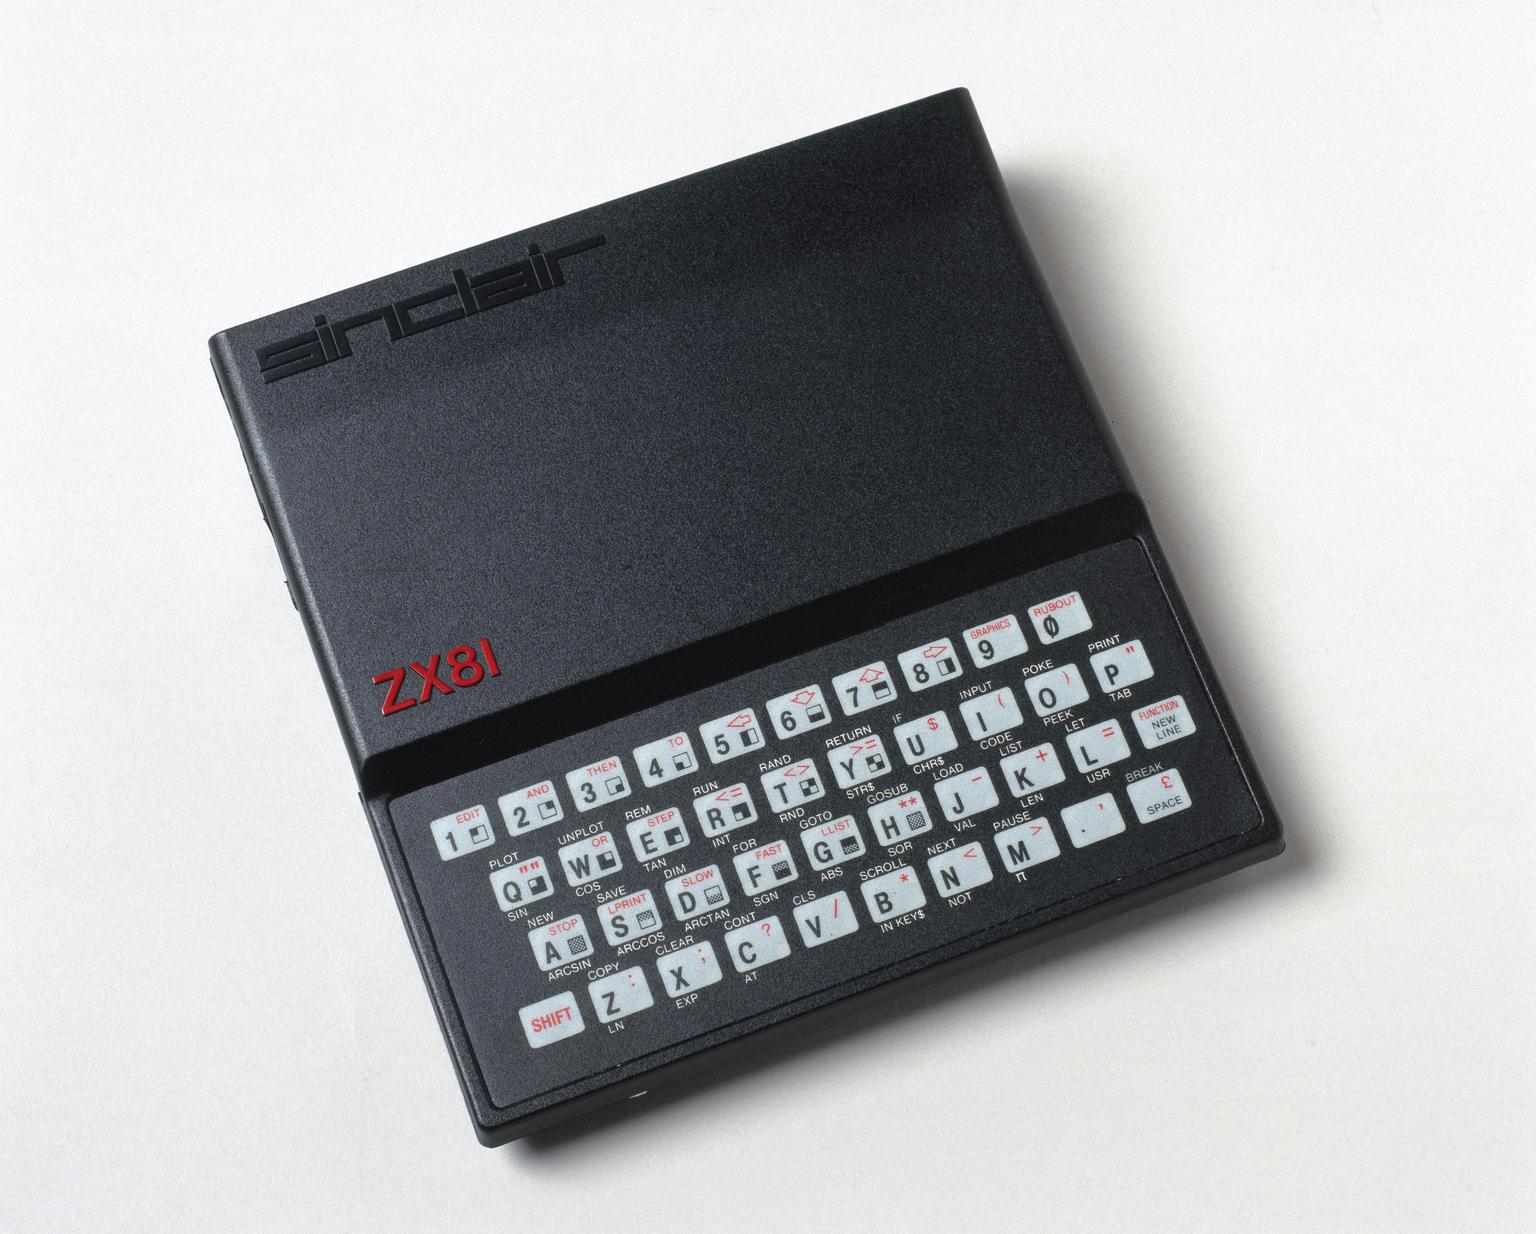 Sinclair ZX 81 microcomputer, 1981-1985